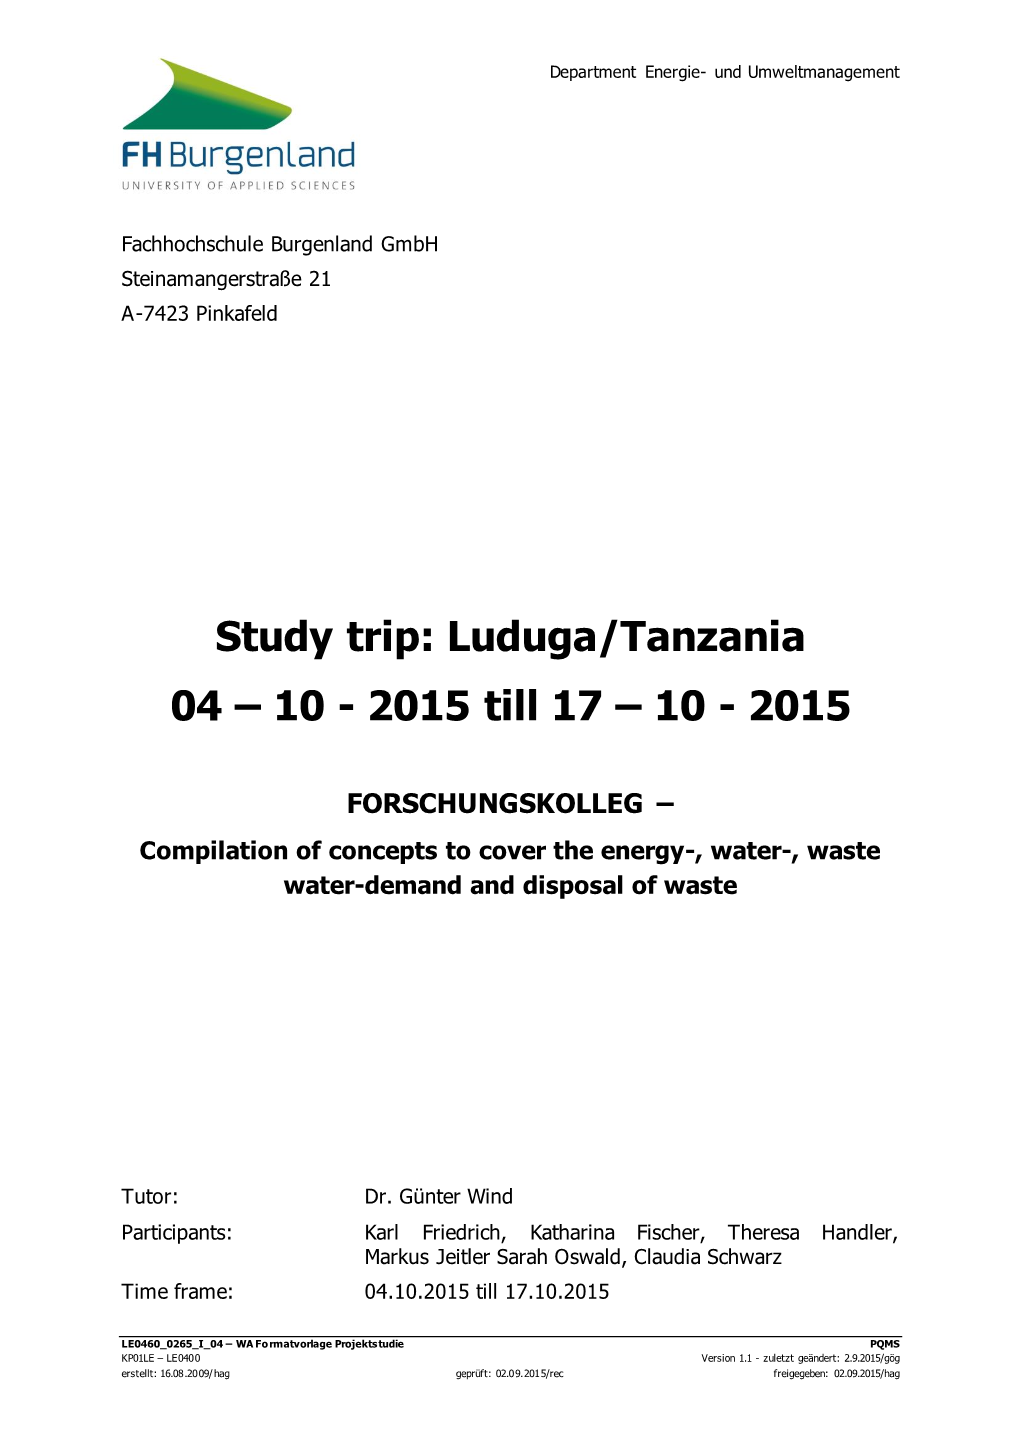 Study Trip: Luduga/Tanzania 04 – 10 - 2015 Till 17 – 10 - 2015